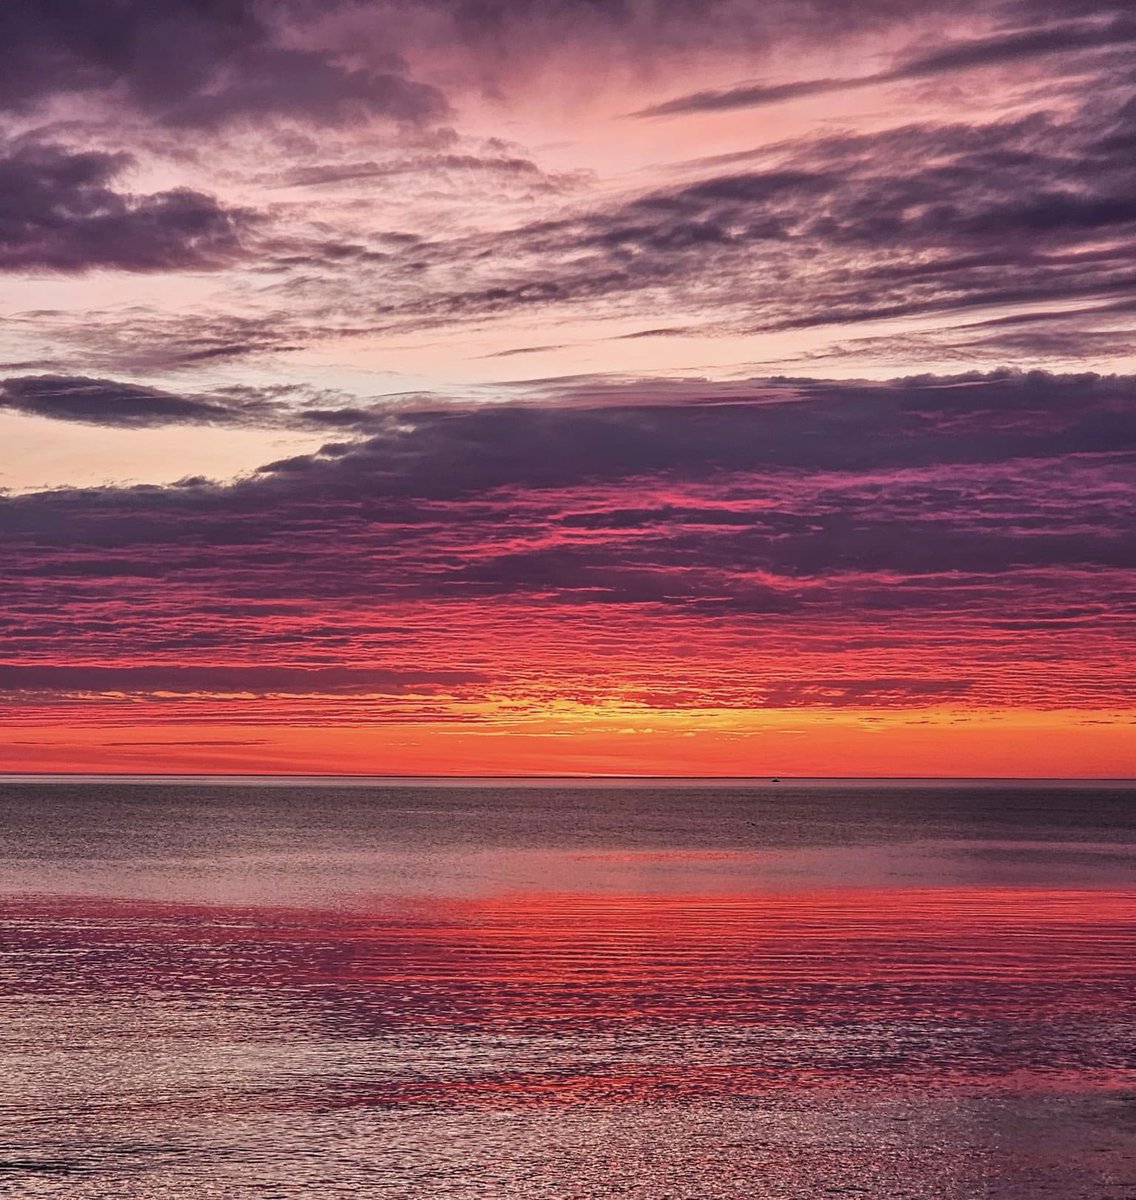 #CapeCod Bay sunrise
By ~ Joe Johnson